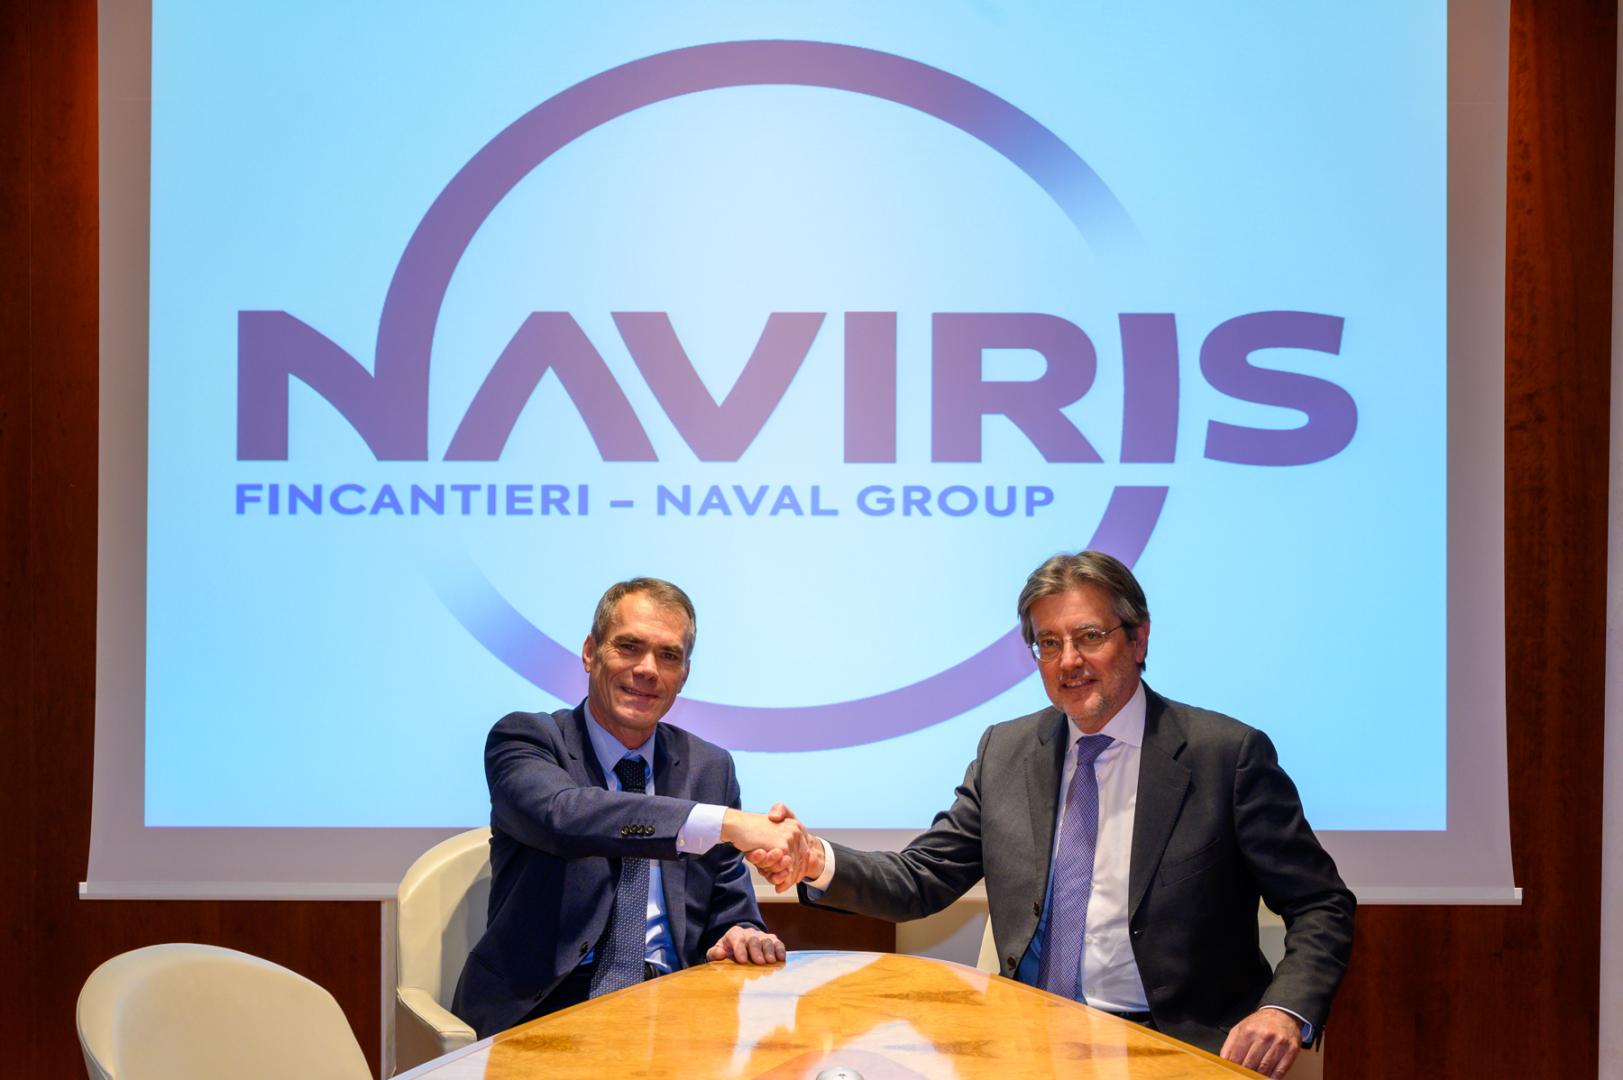 Naviris, la JV tra Fincantieri e Naval Group, è pienamente operativa